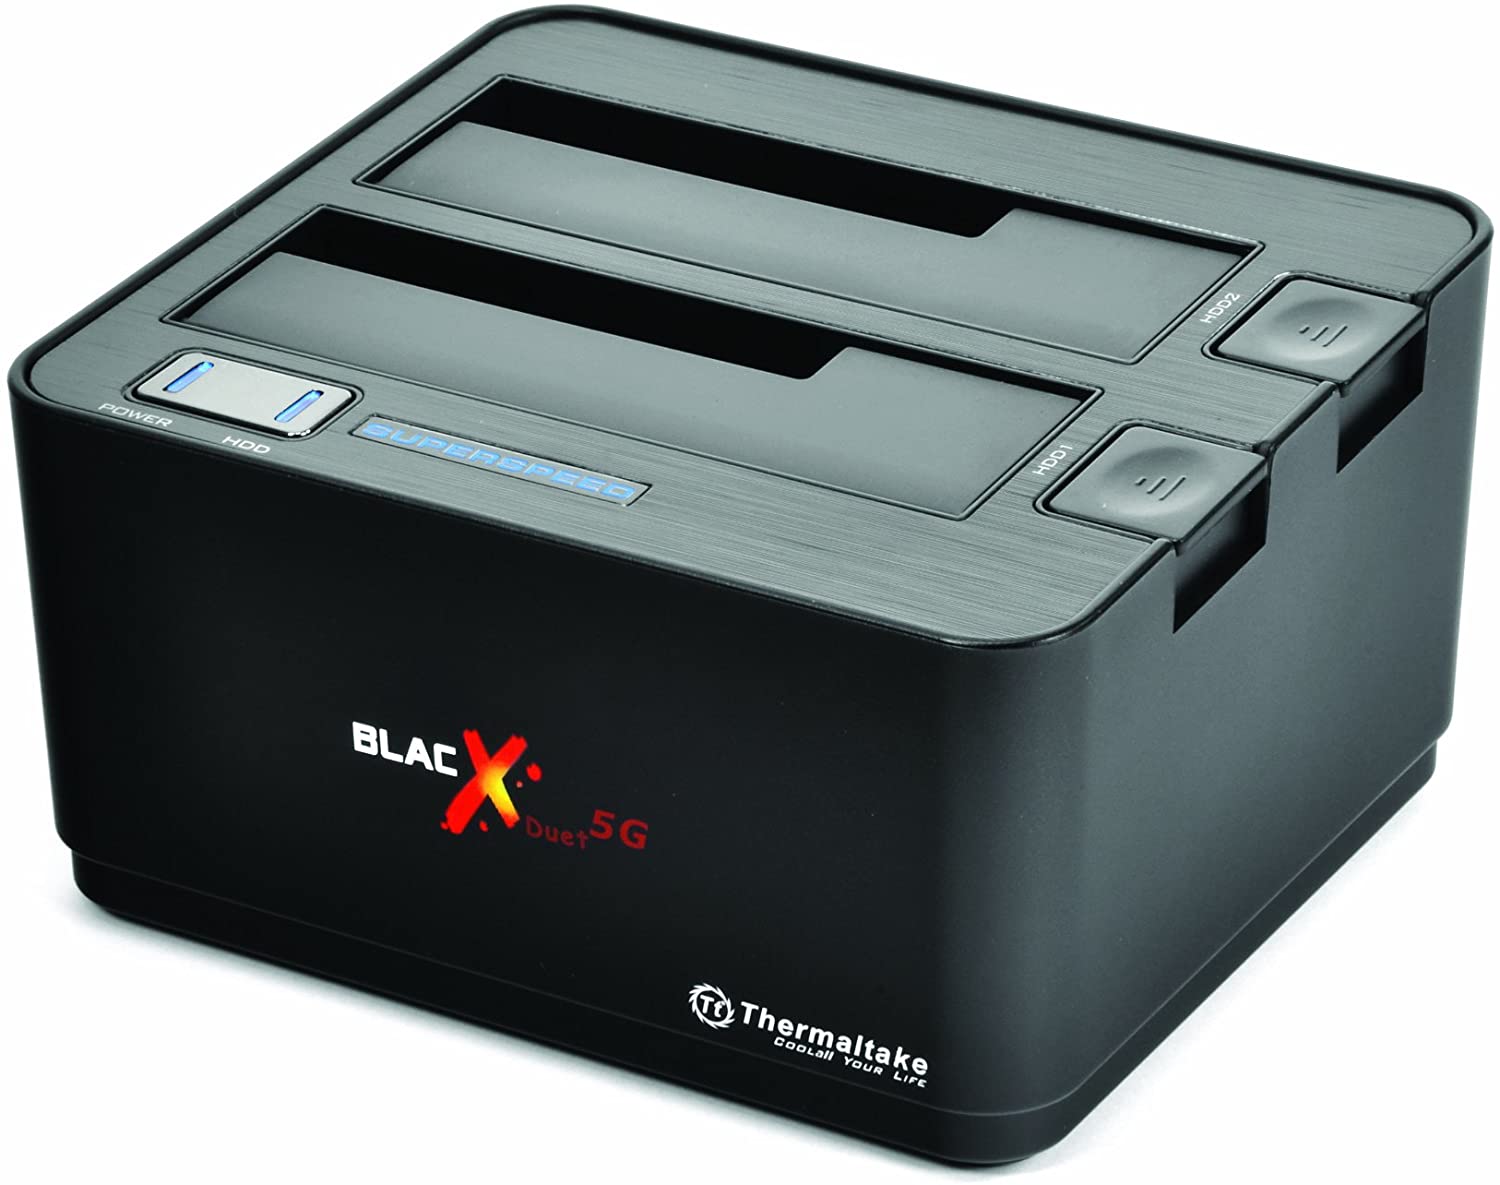 Thermaltake BlacX Duet 5G 2.5”/3.5” USB 3.0 Hard Drive Docking Station (ST0022U)